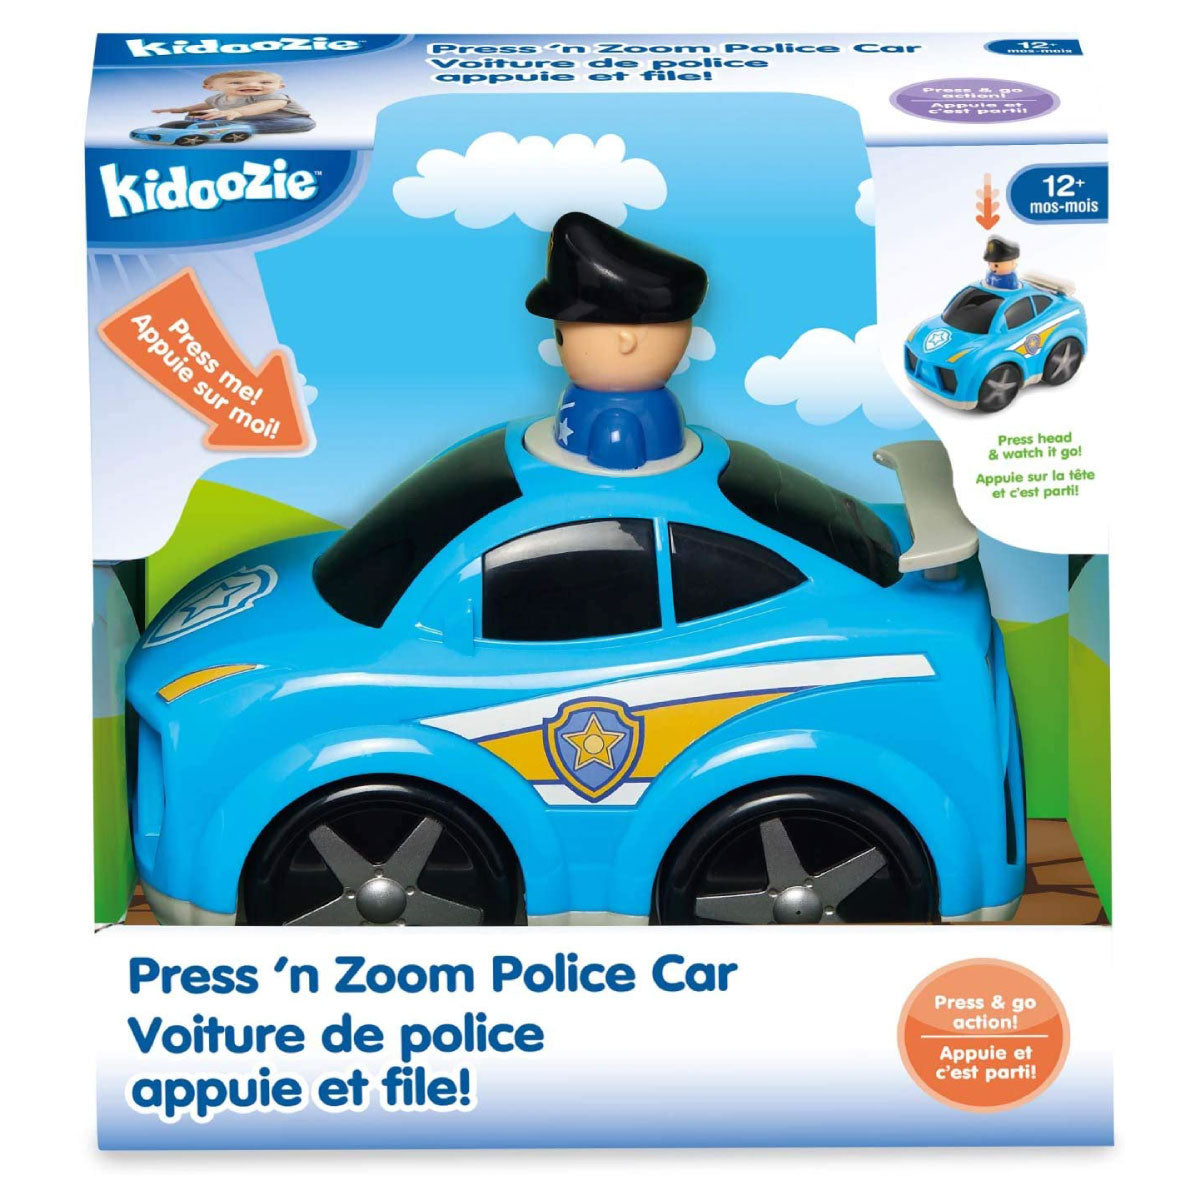 Press n’ Zoom Police Car from Kidoozie